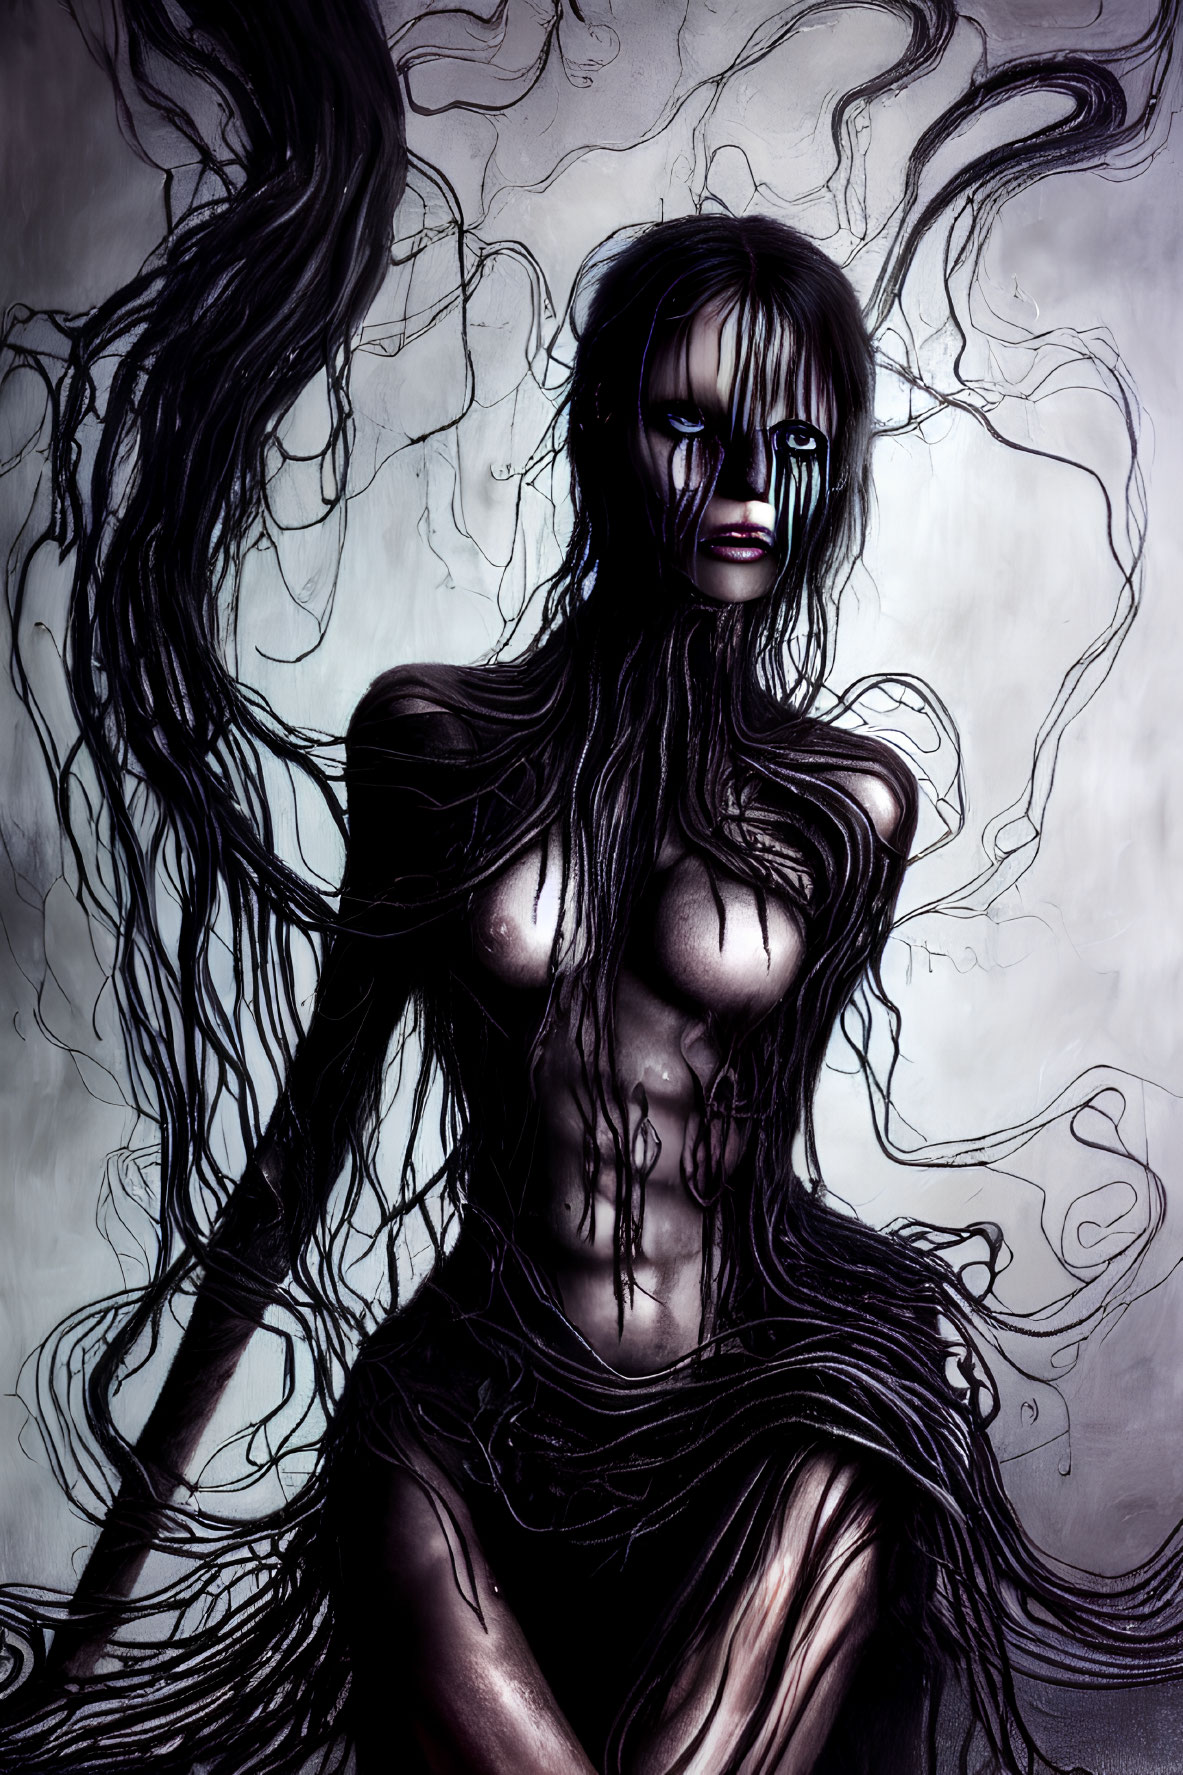 Dark fantasy art: Woman with long dark hair and haunting eyes